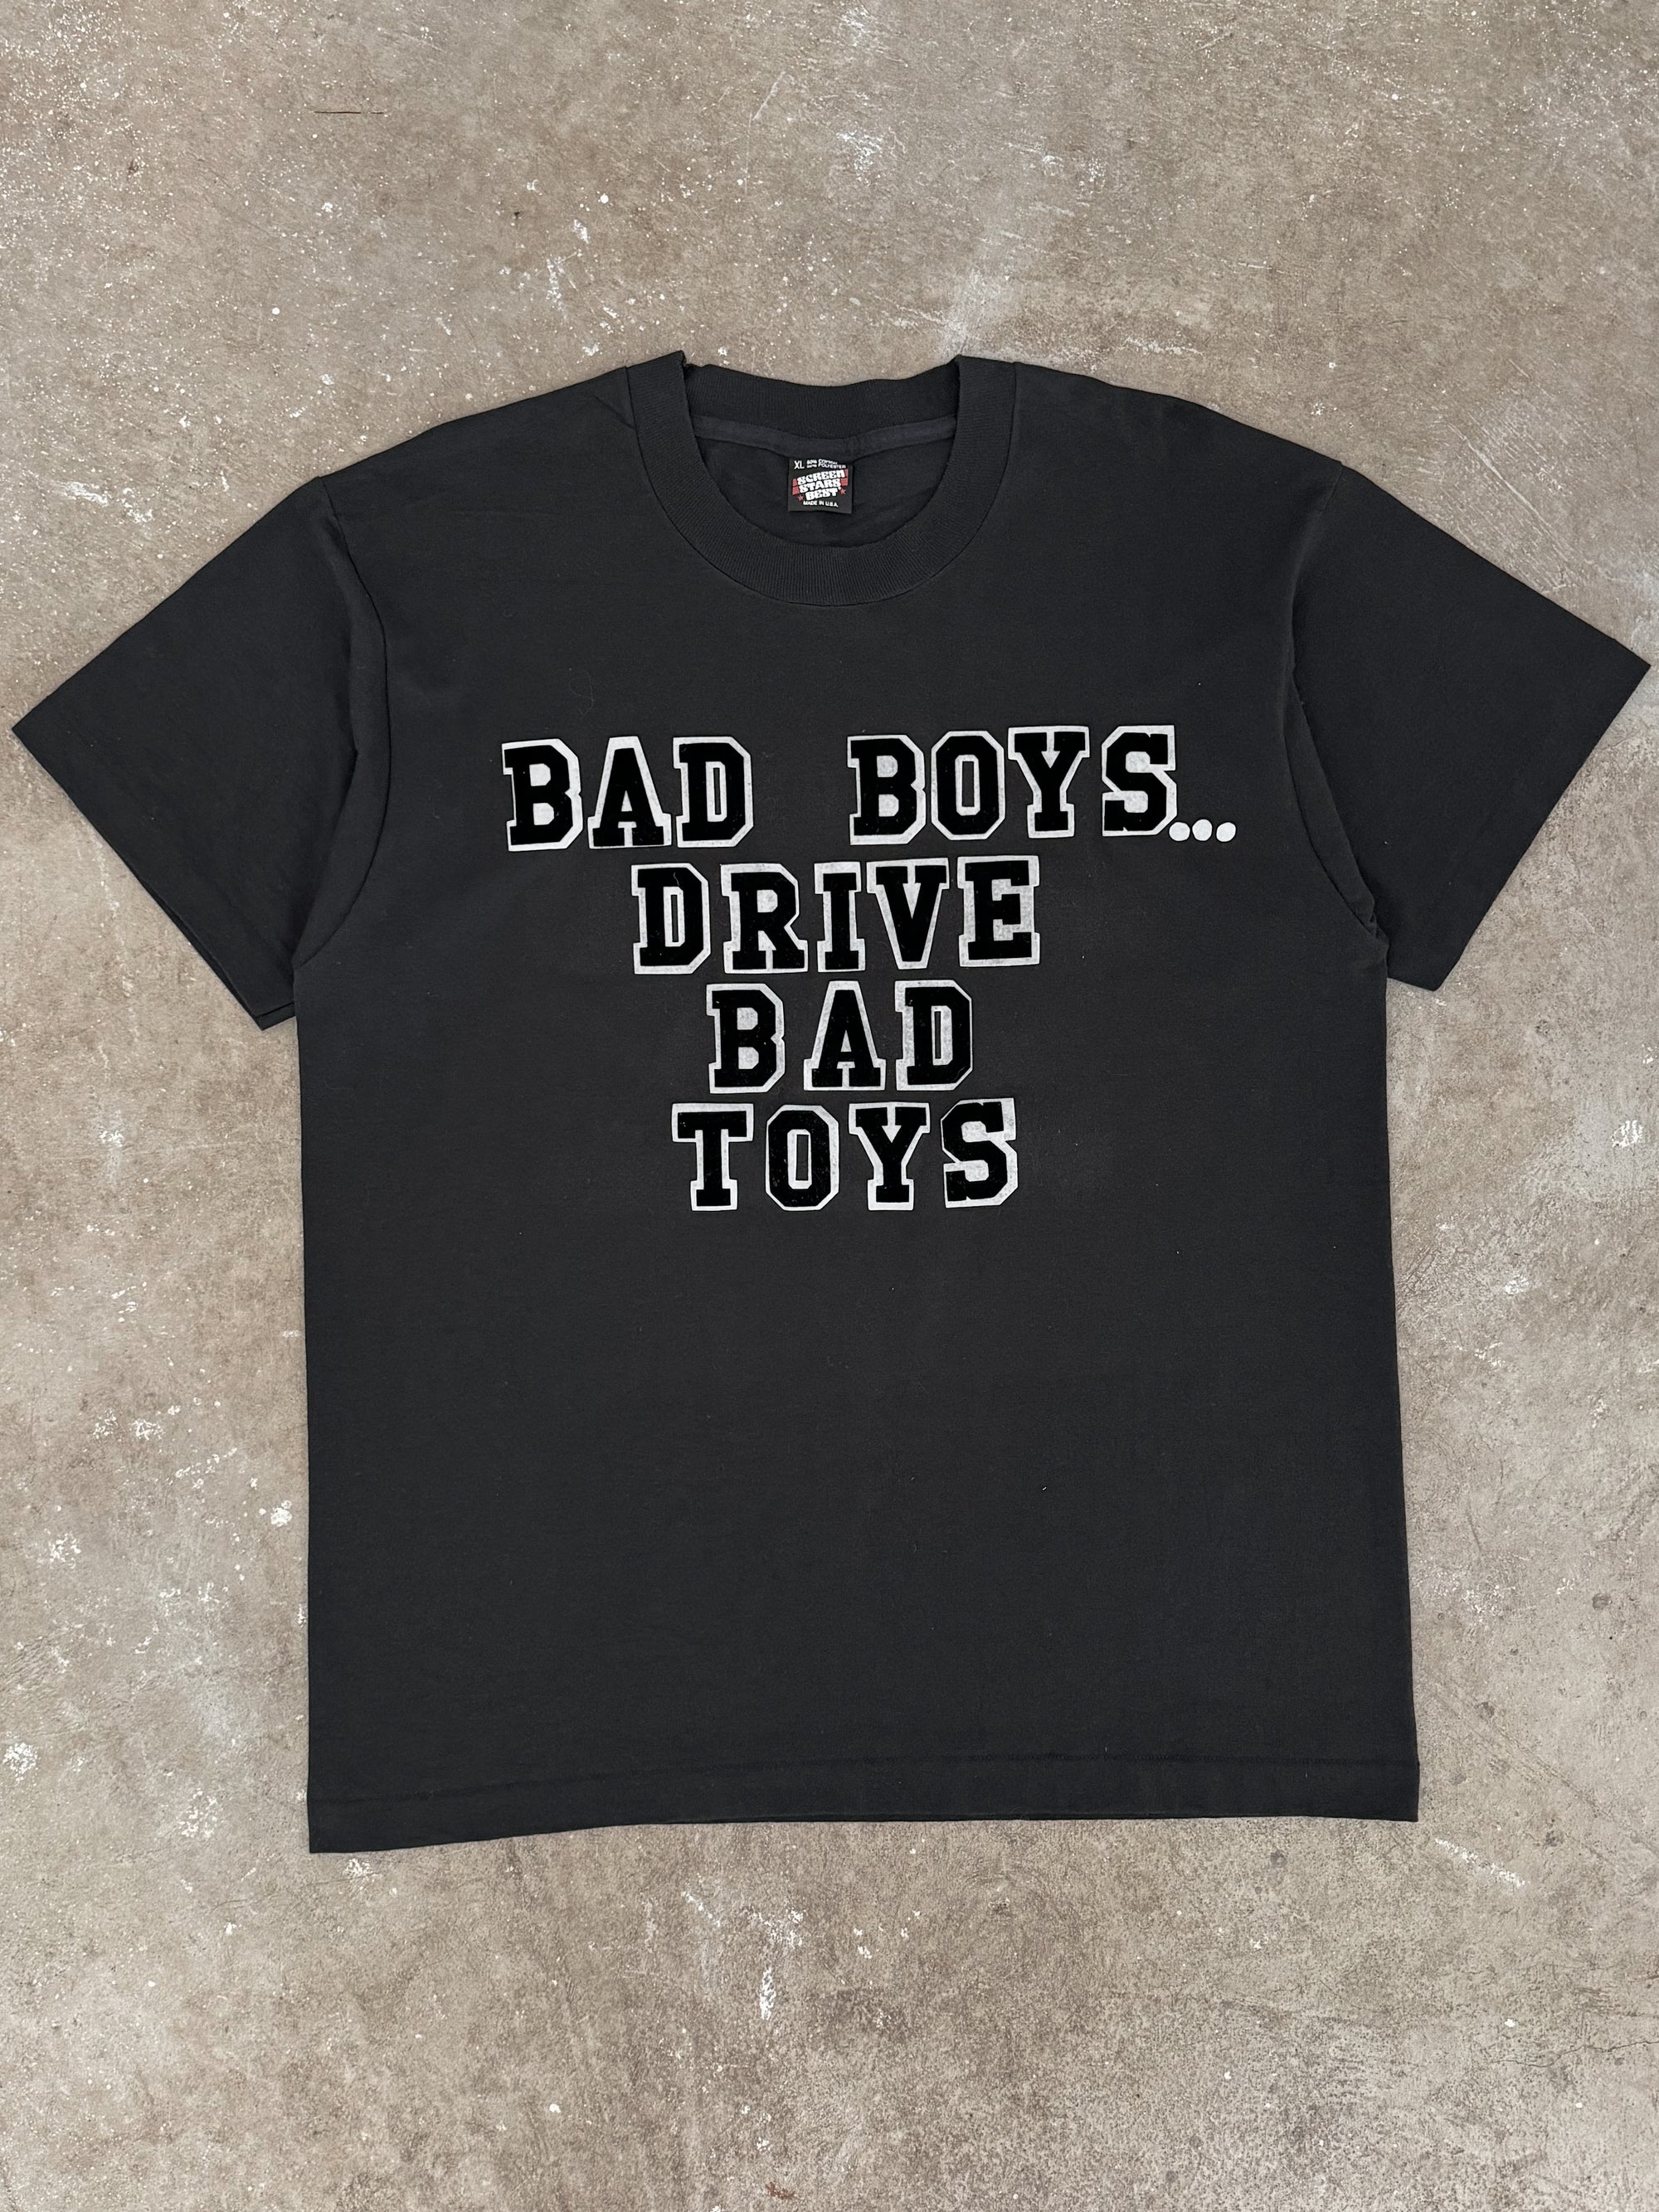 1980s/90s "Bad Boys Drive Bad Toys" Felt Letter Tee (L)